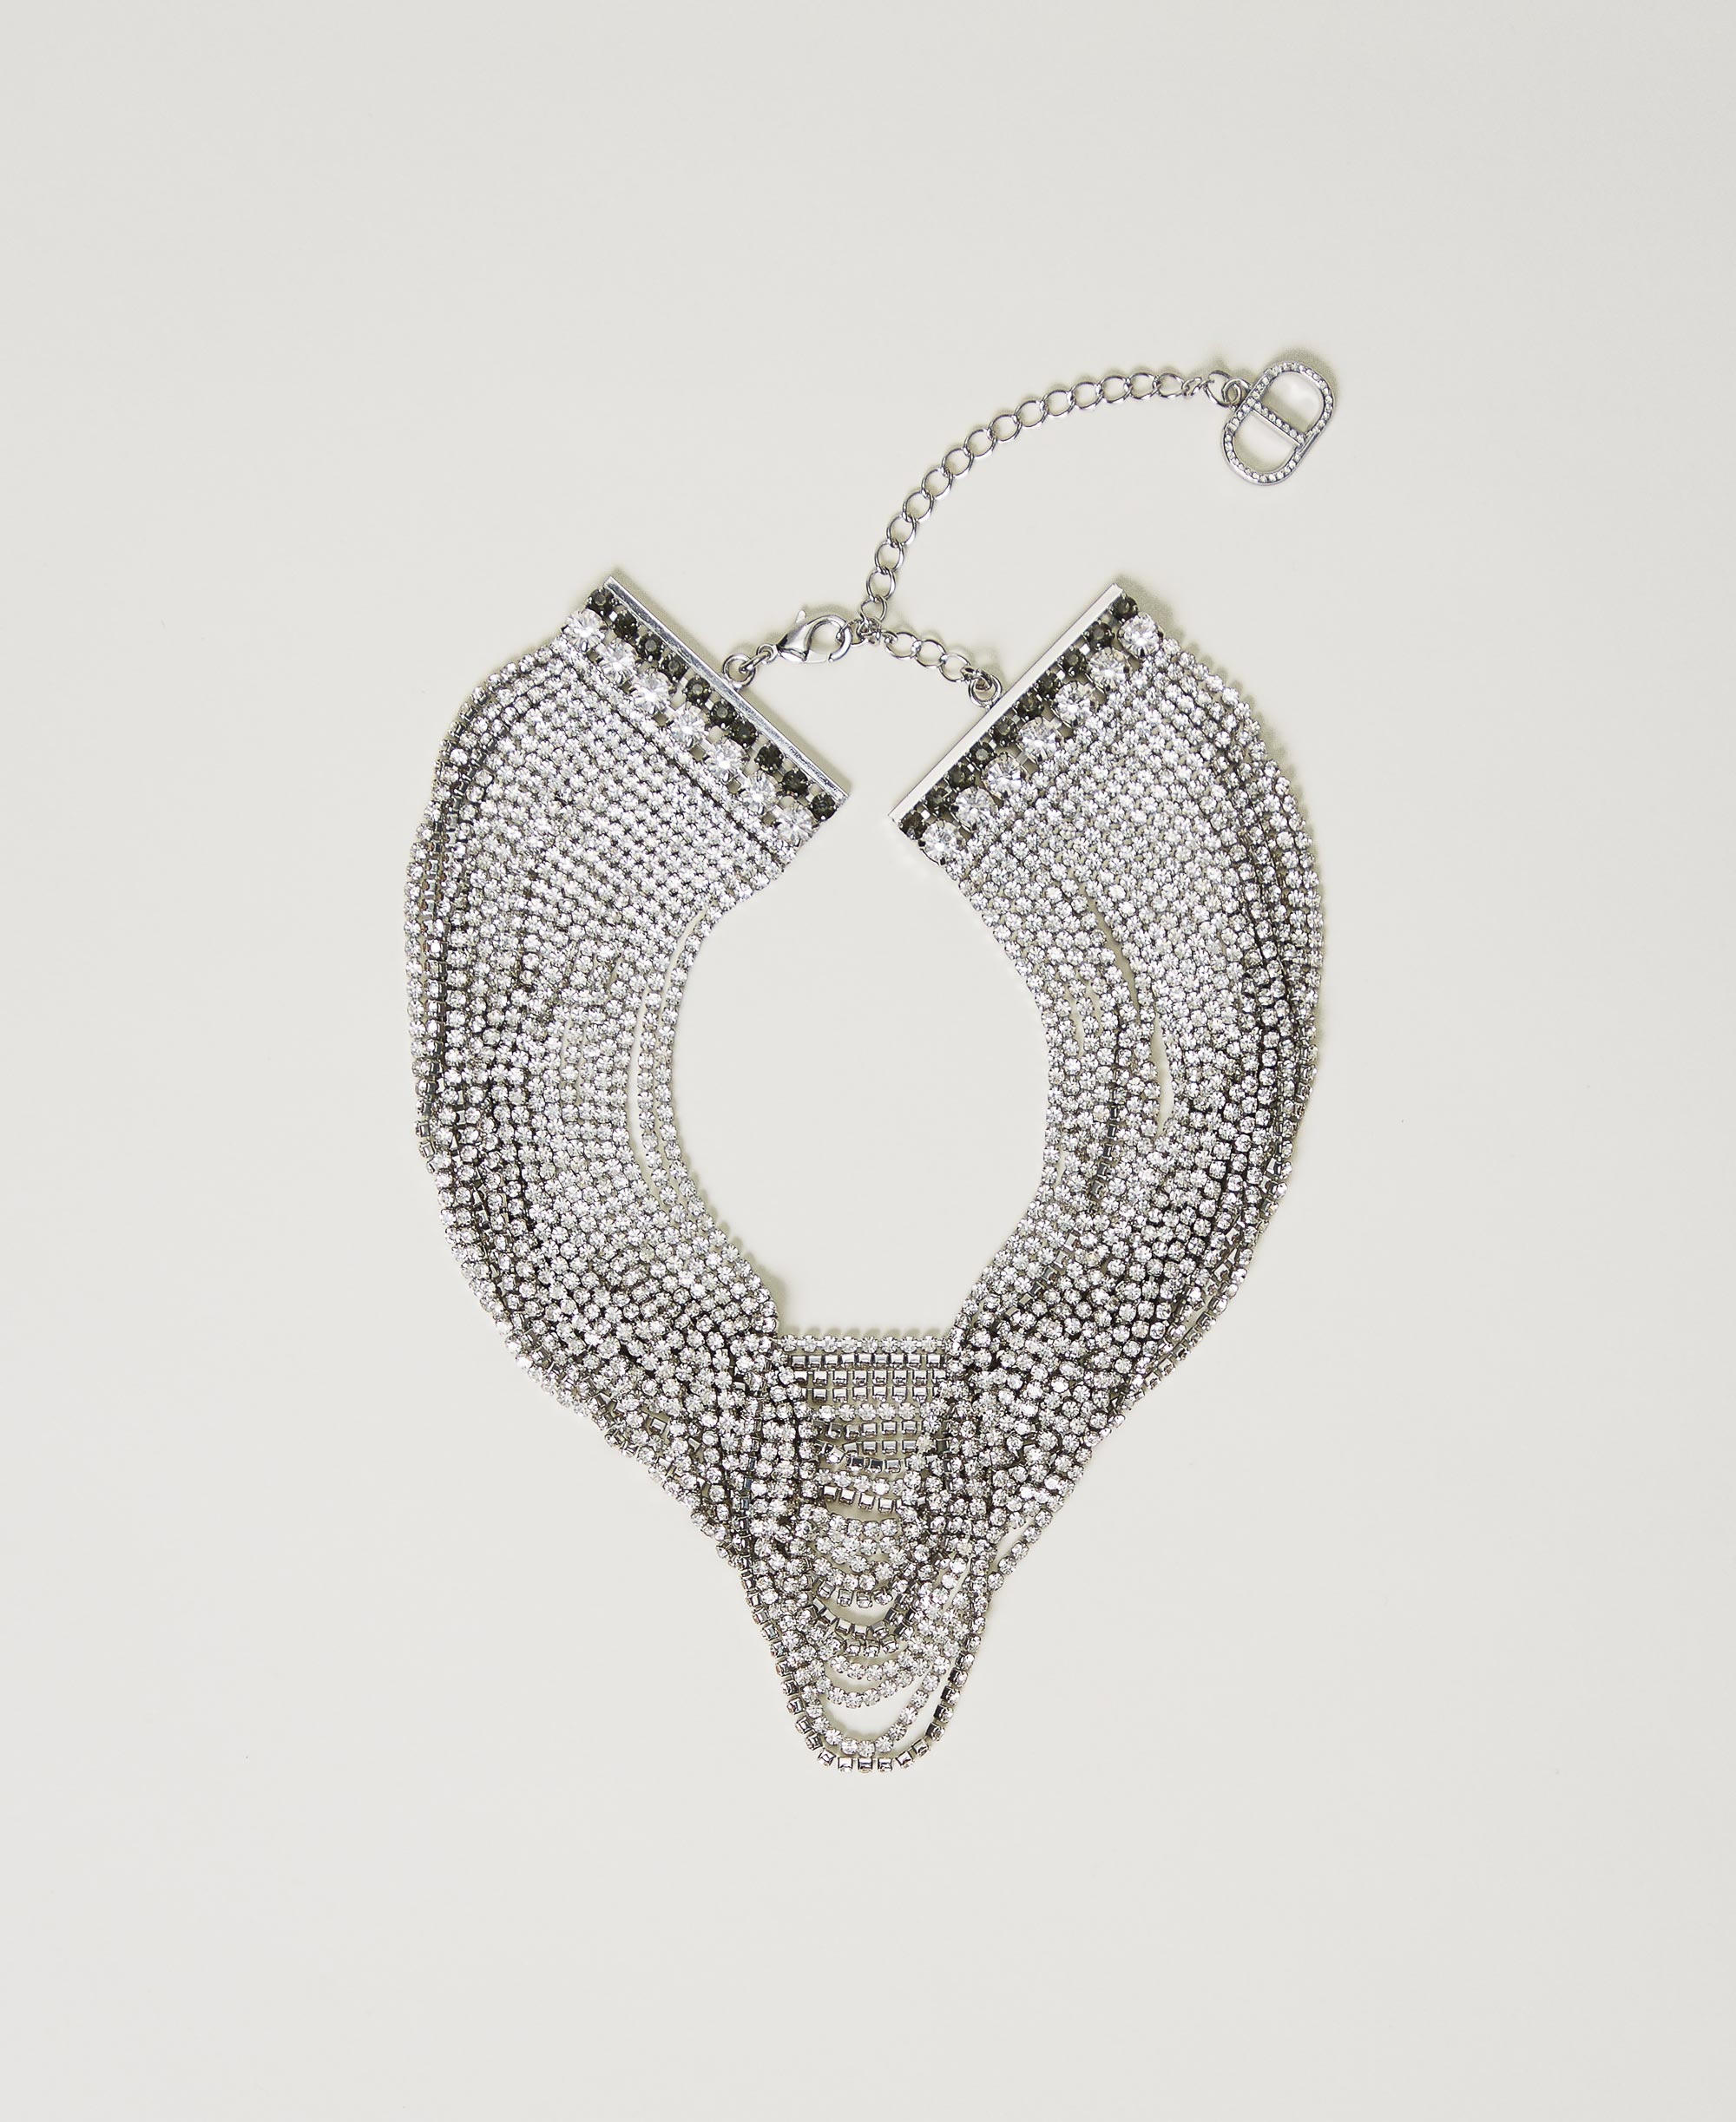 Multi-strand necklace with rhinestones